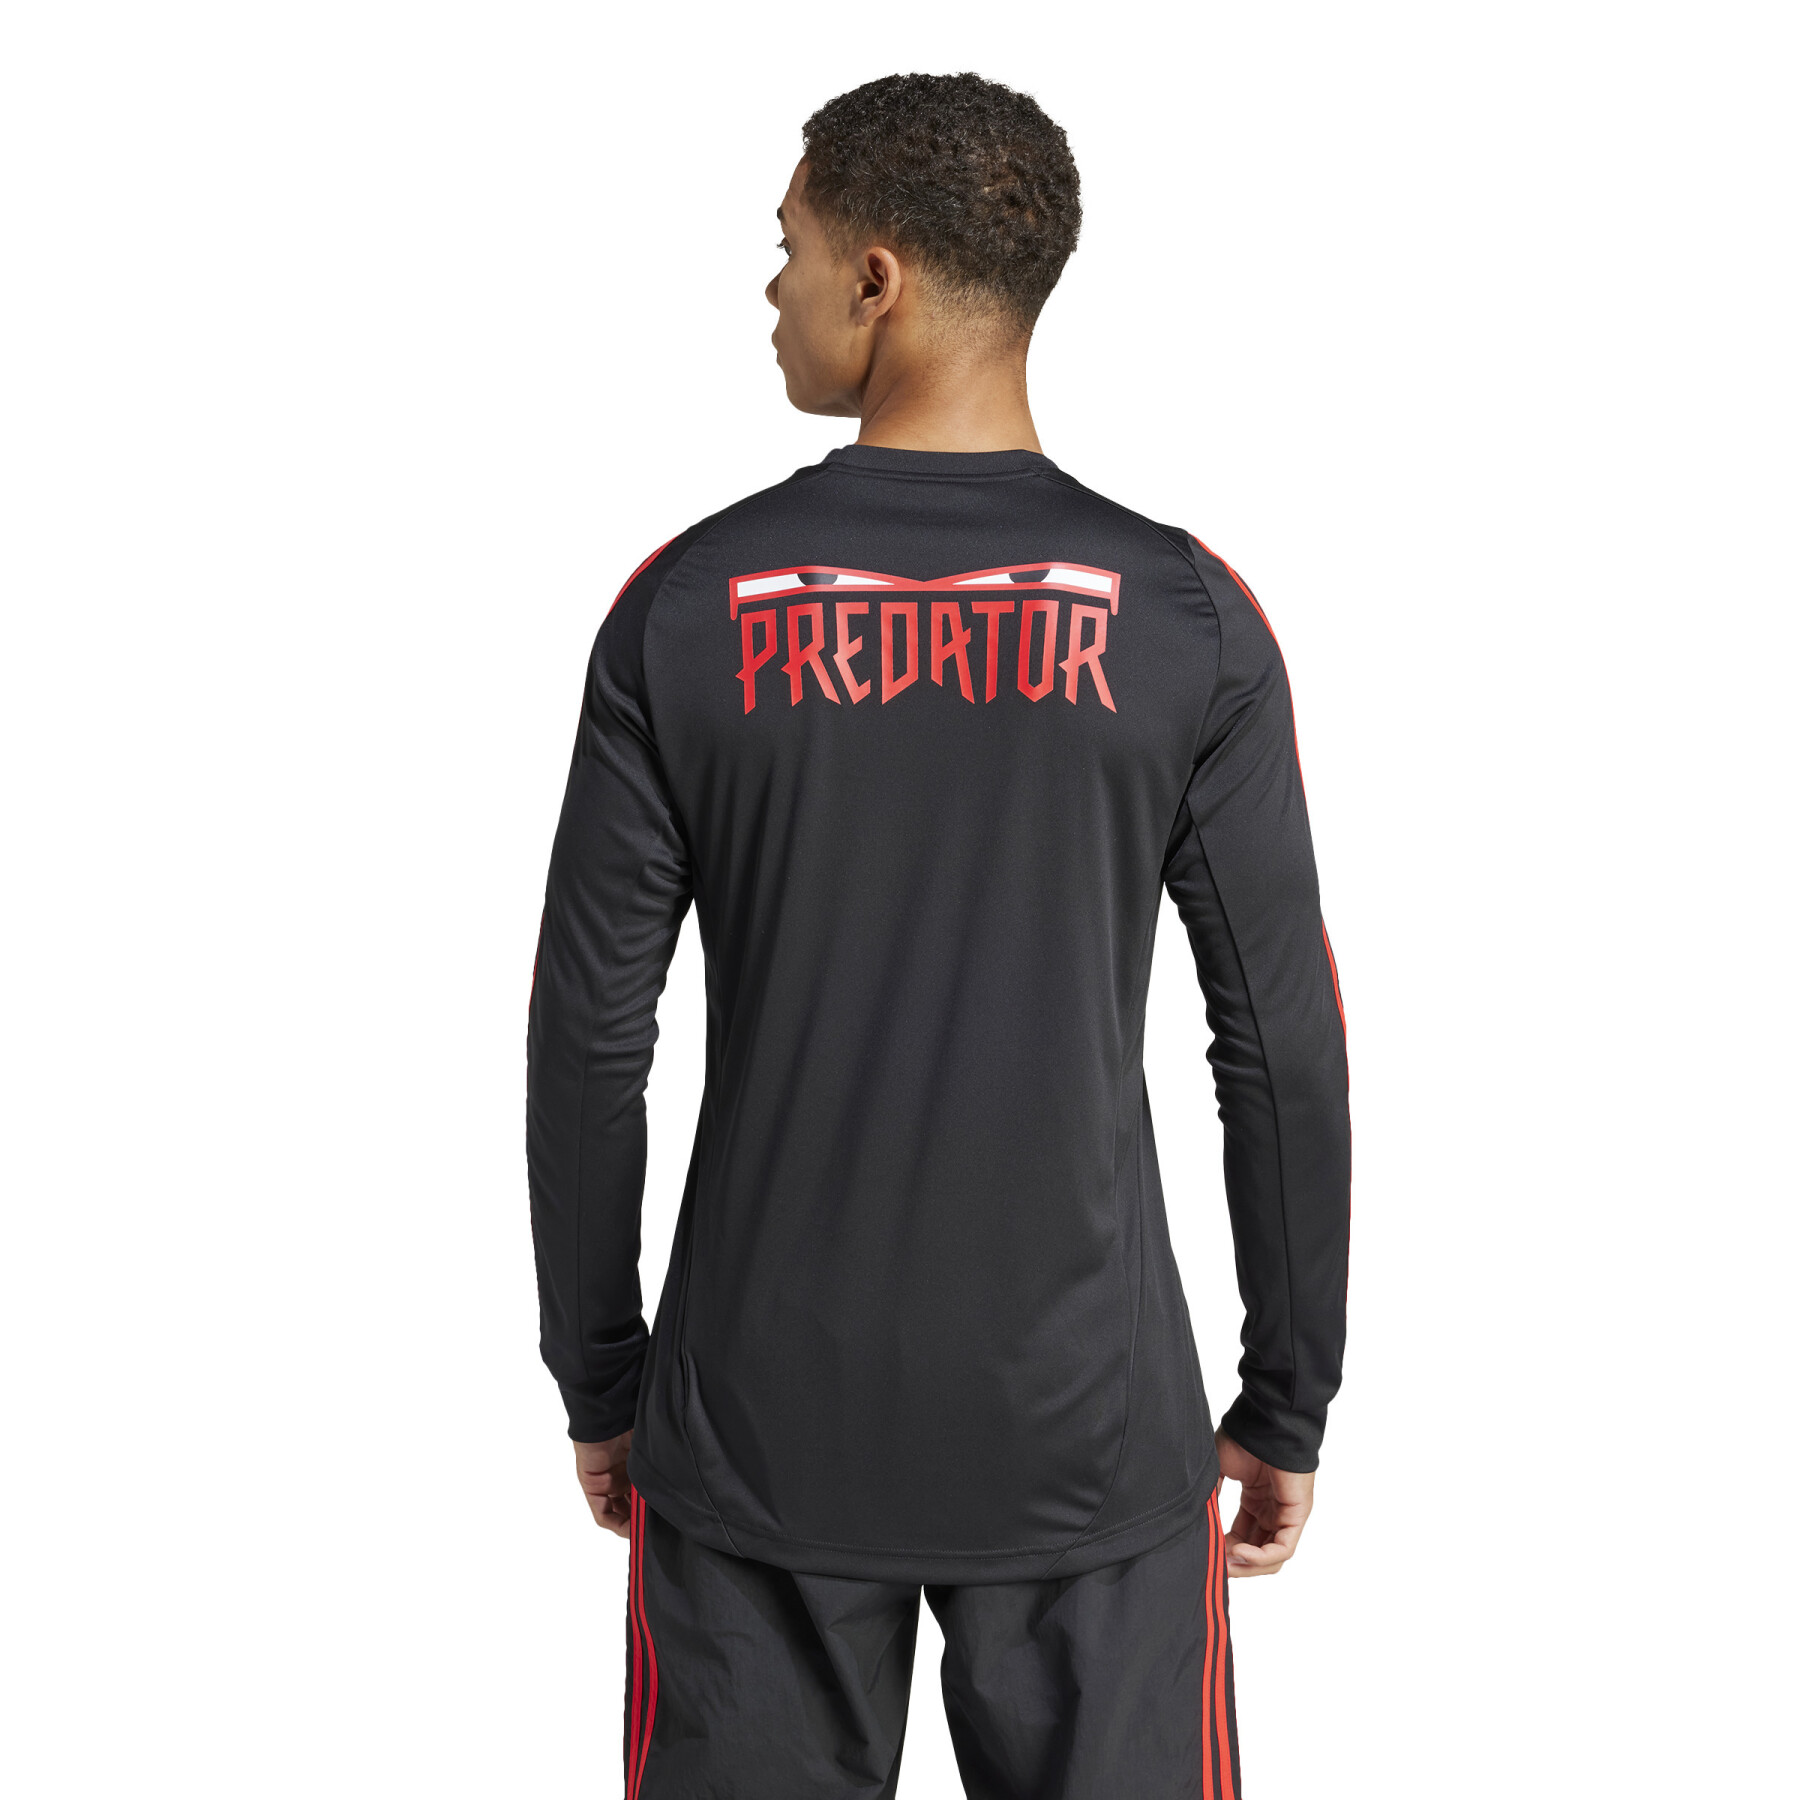 Long sleeve shirt adidas Predator 30th